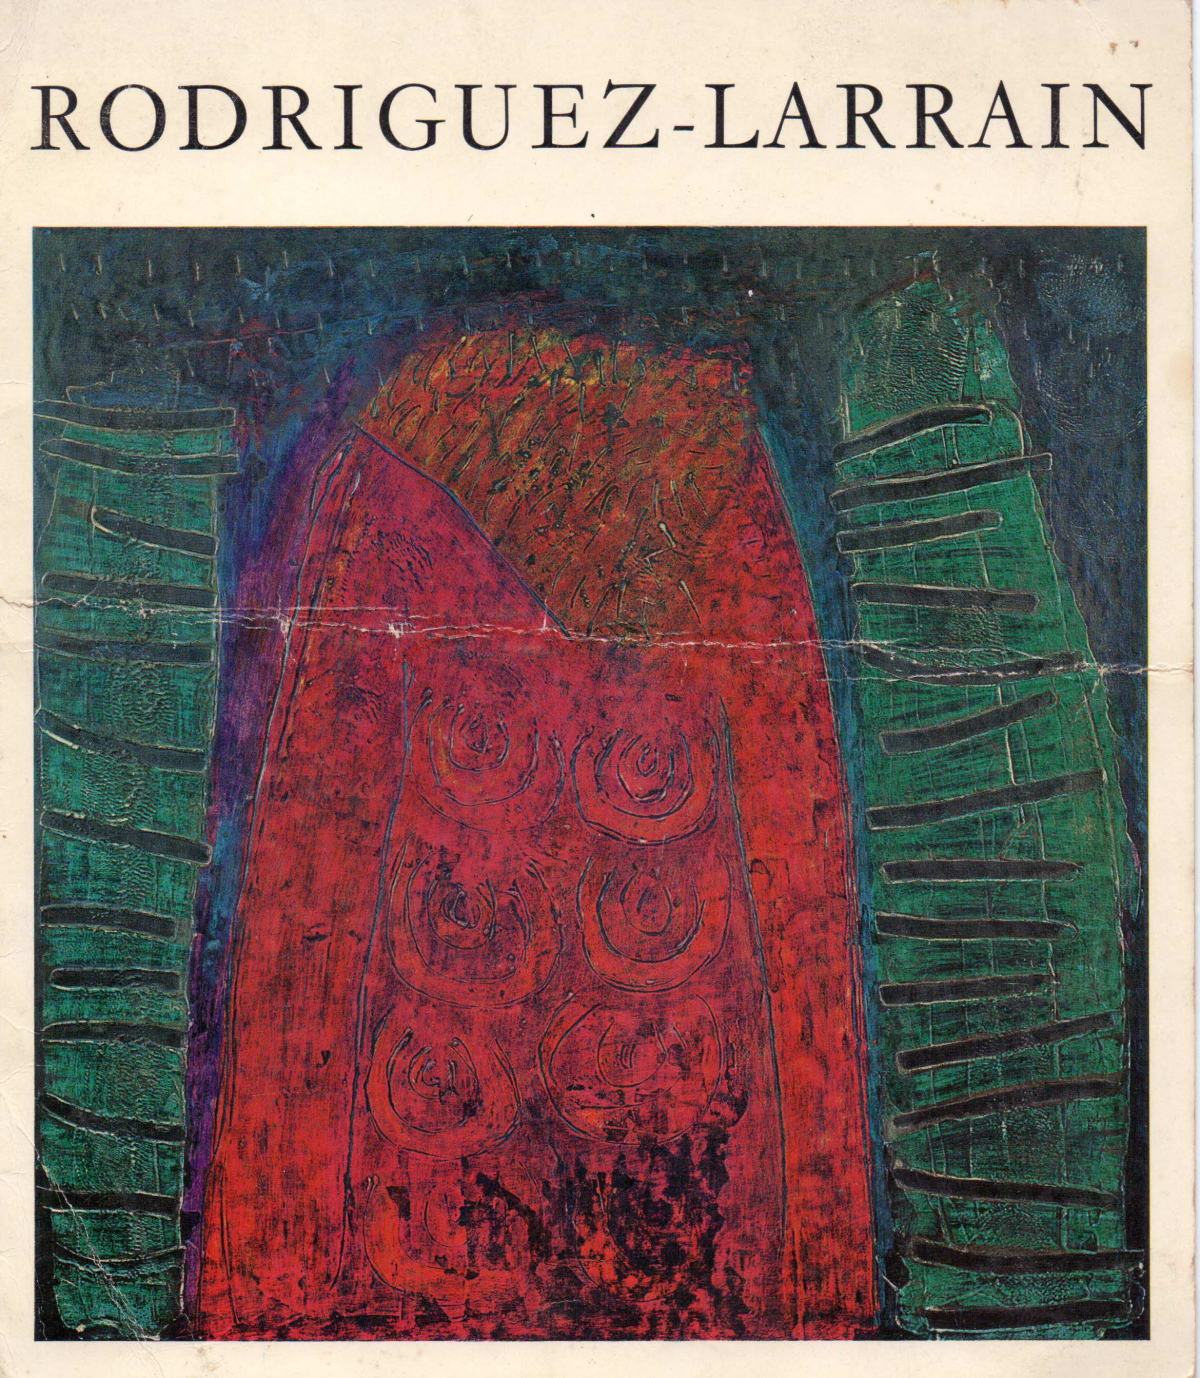 Rodriguez-Larrain